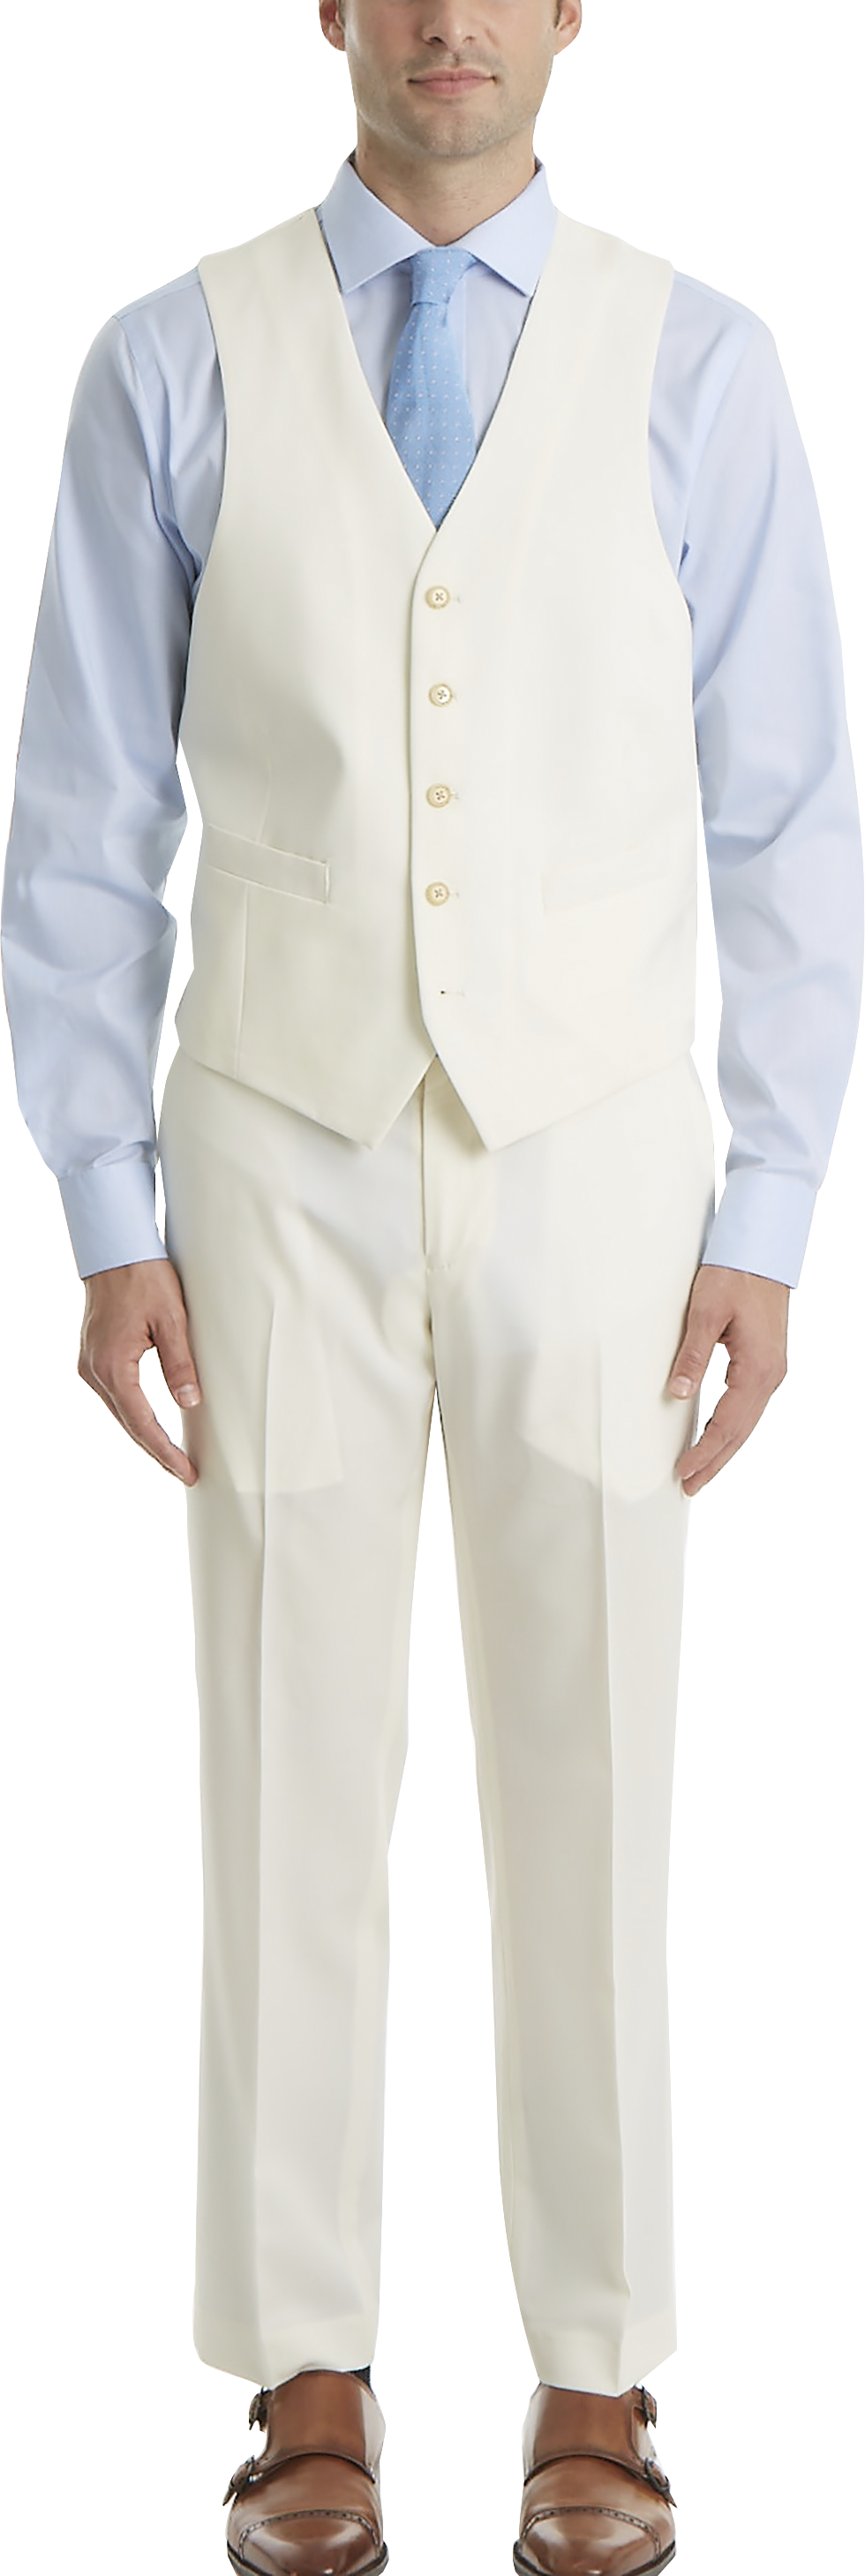 Lauren By Ralph Lauren Classic Fit Suit Separates Vest, Cream